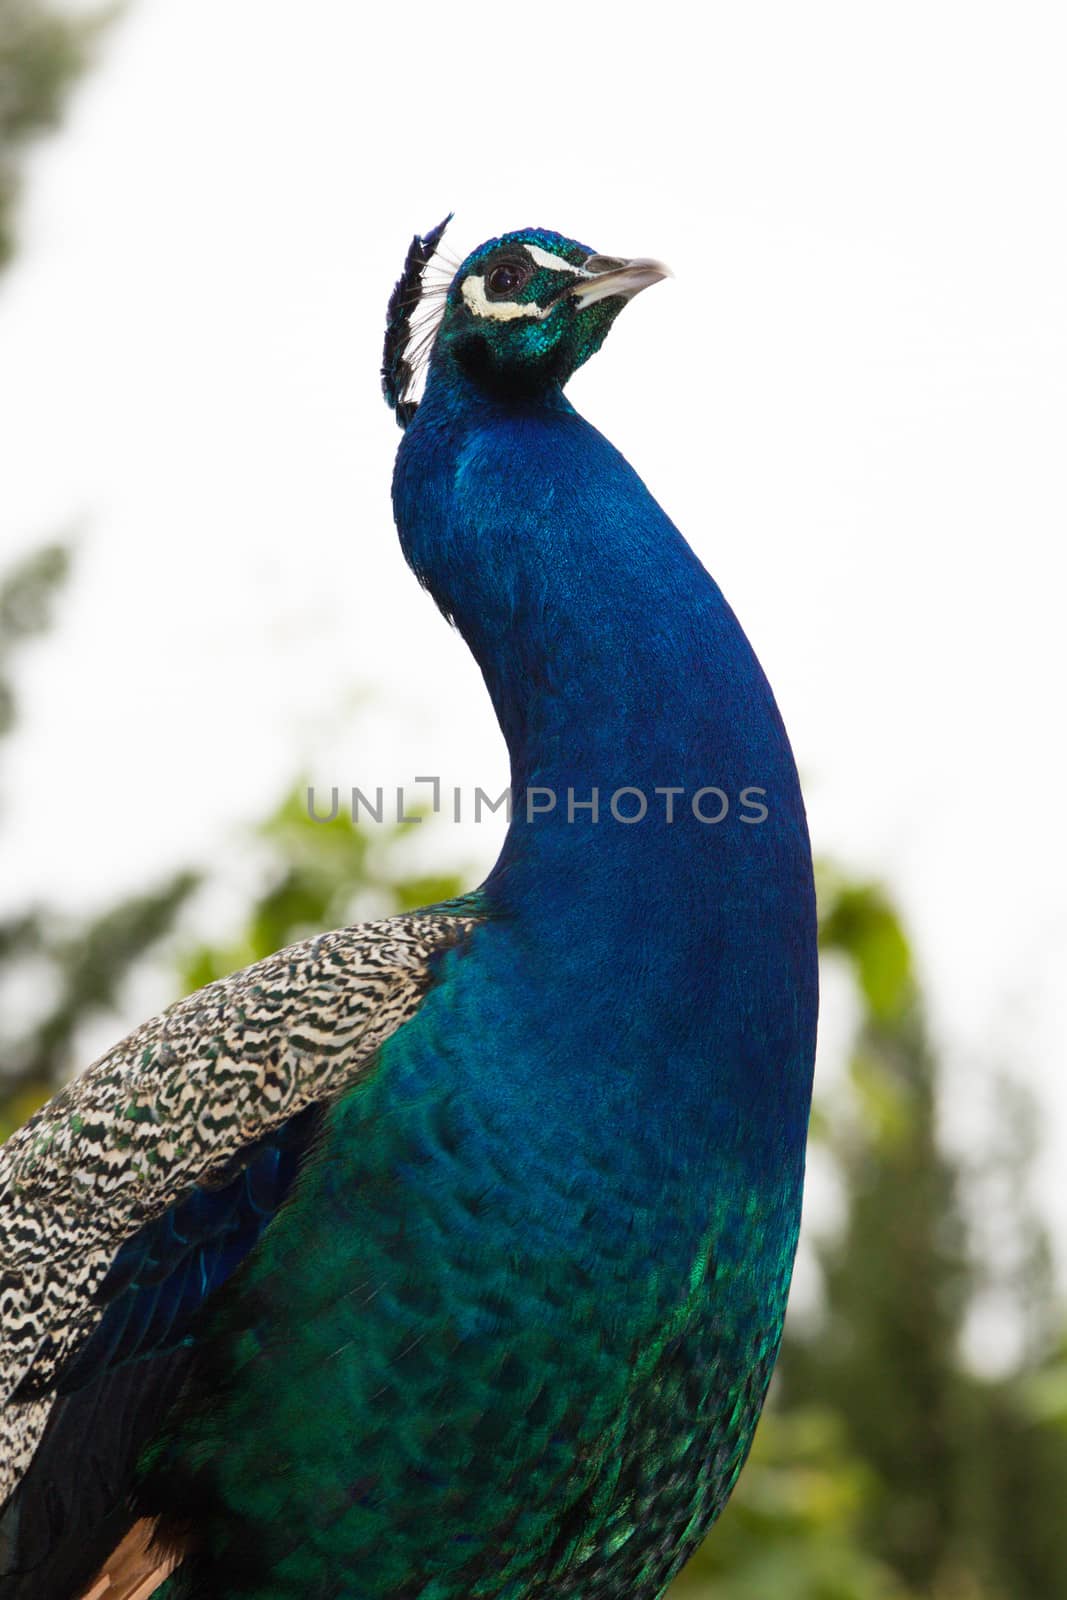 Closeup portrait of a peacock posing in profile.